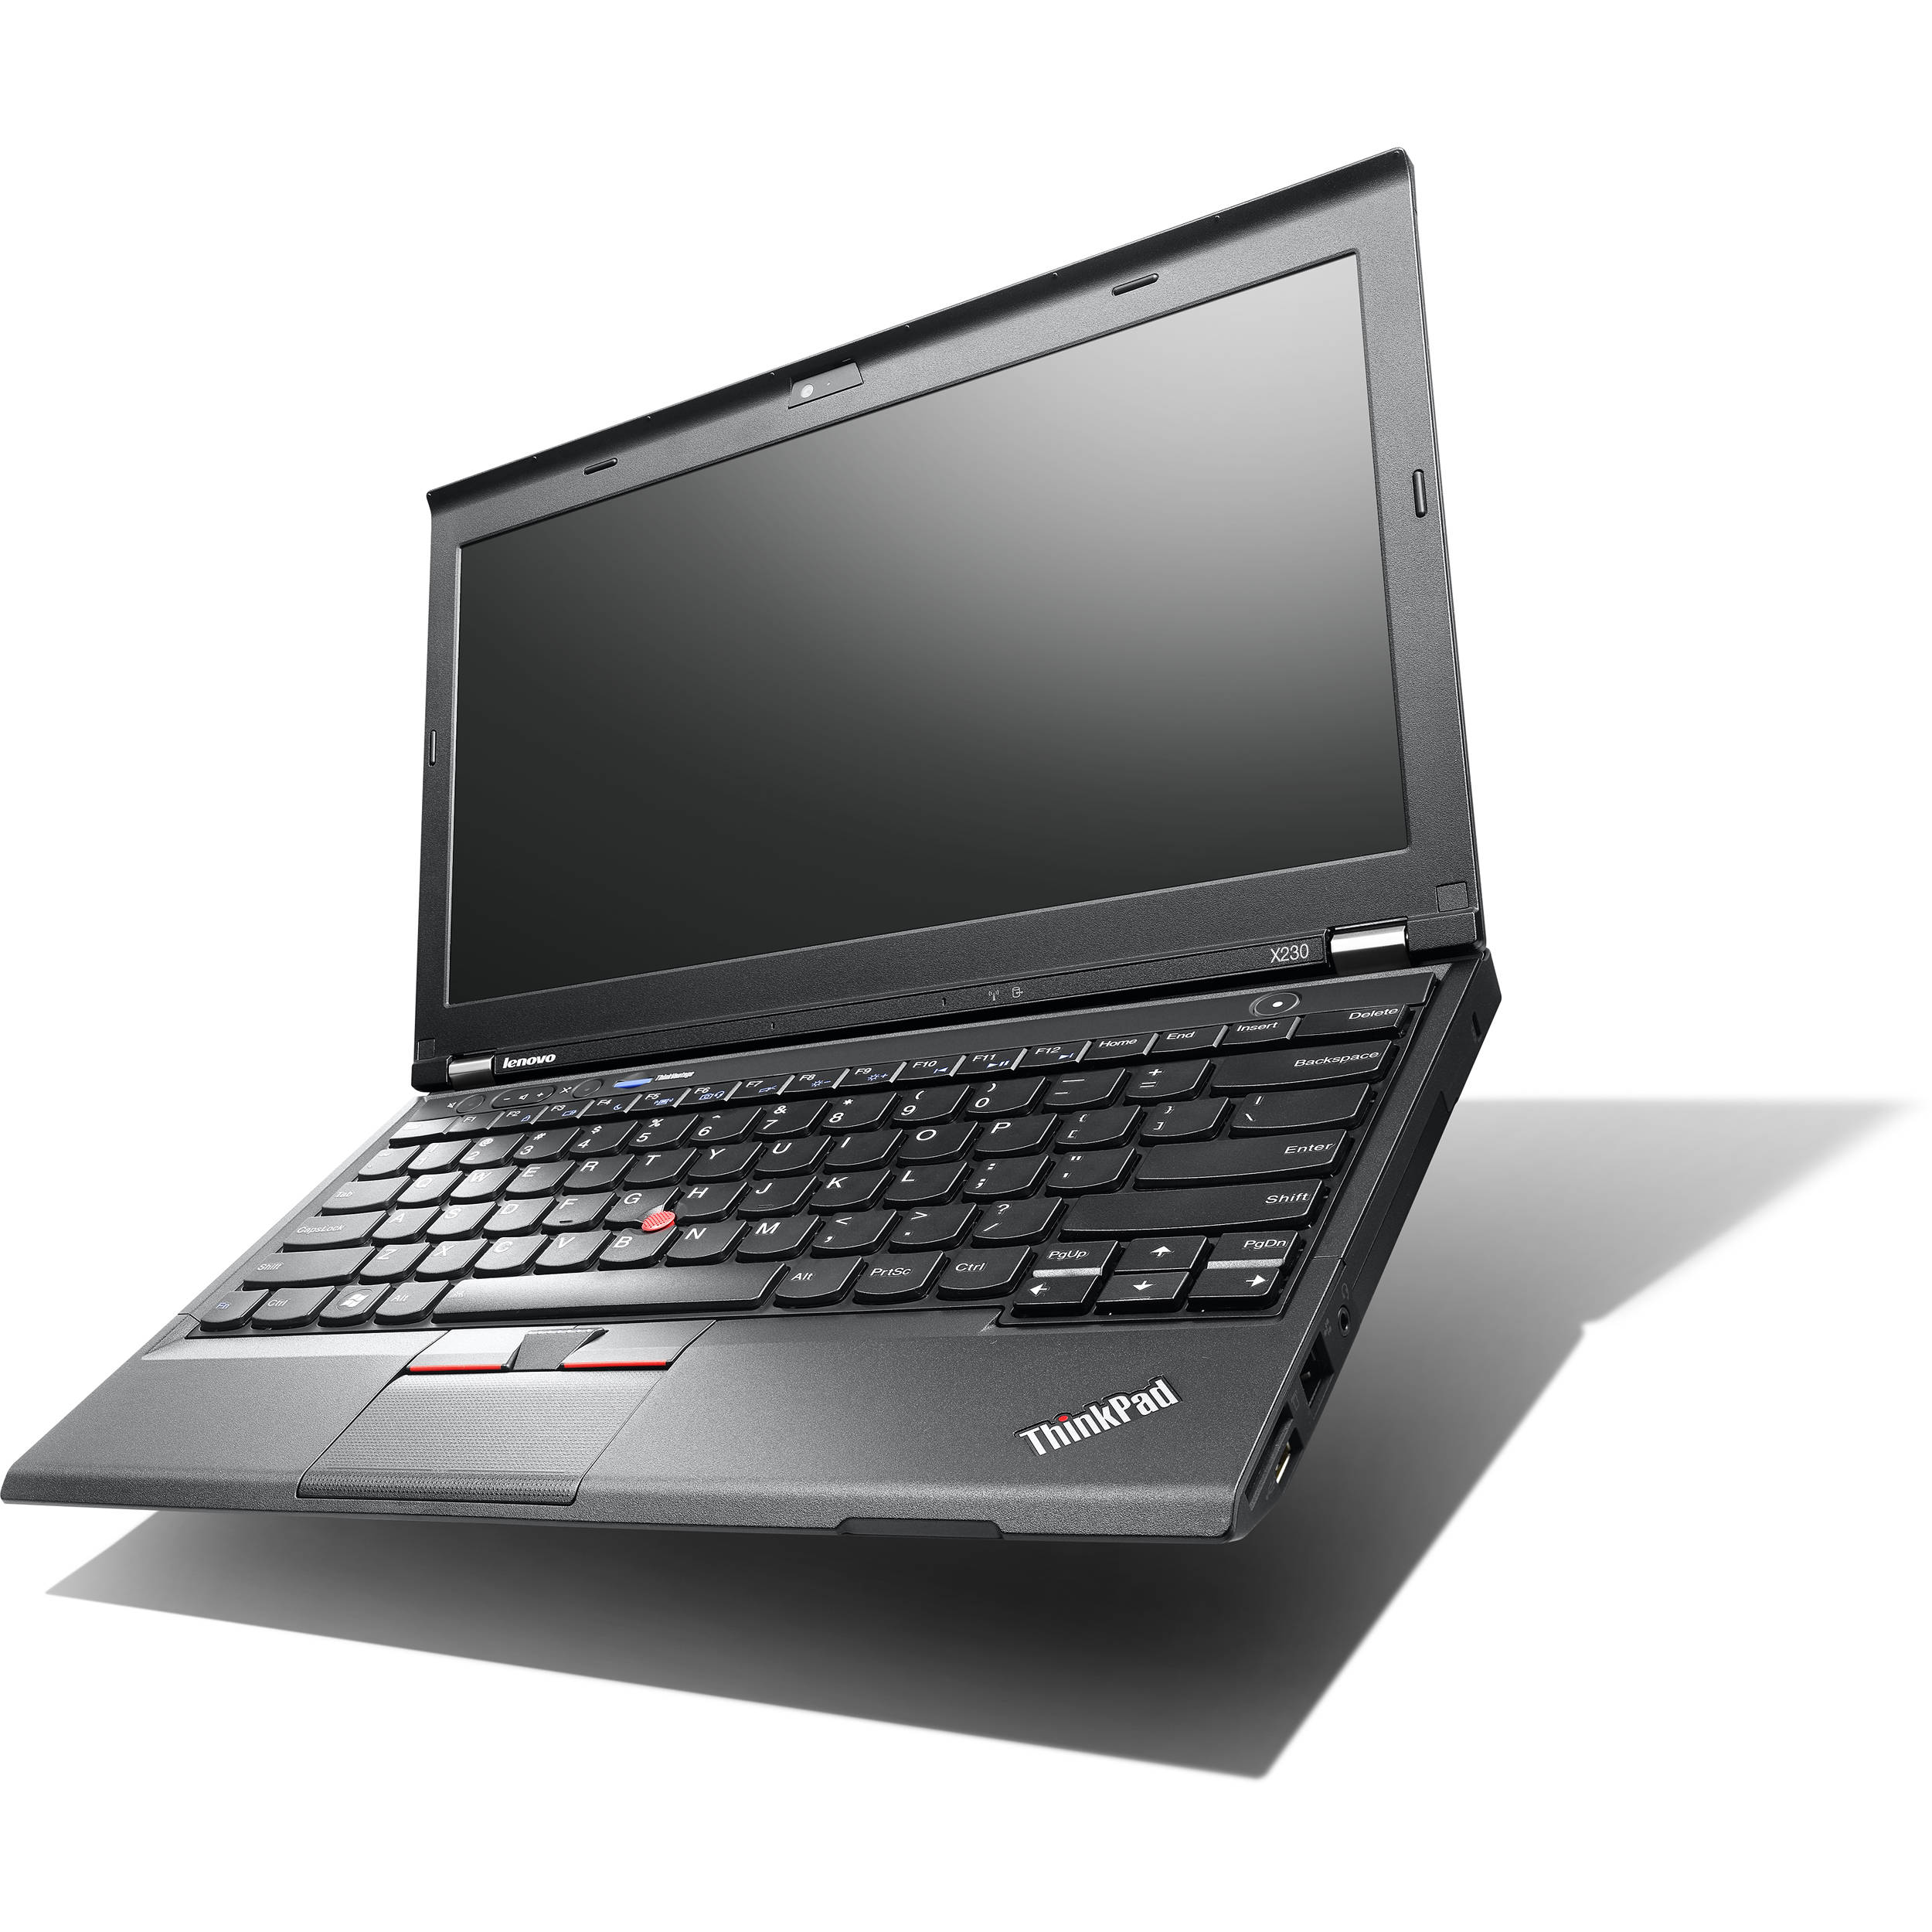 Lenovo Thinkpad X230 23 Hpu 12 5 Laptop 23hpu B H